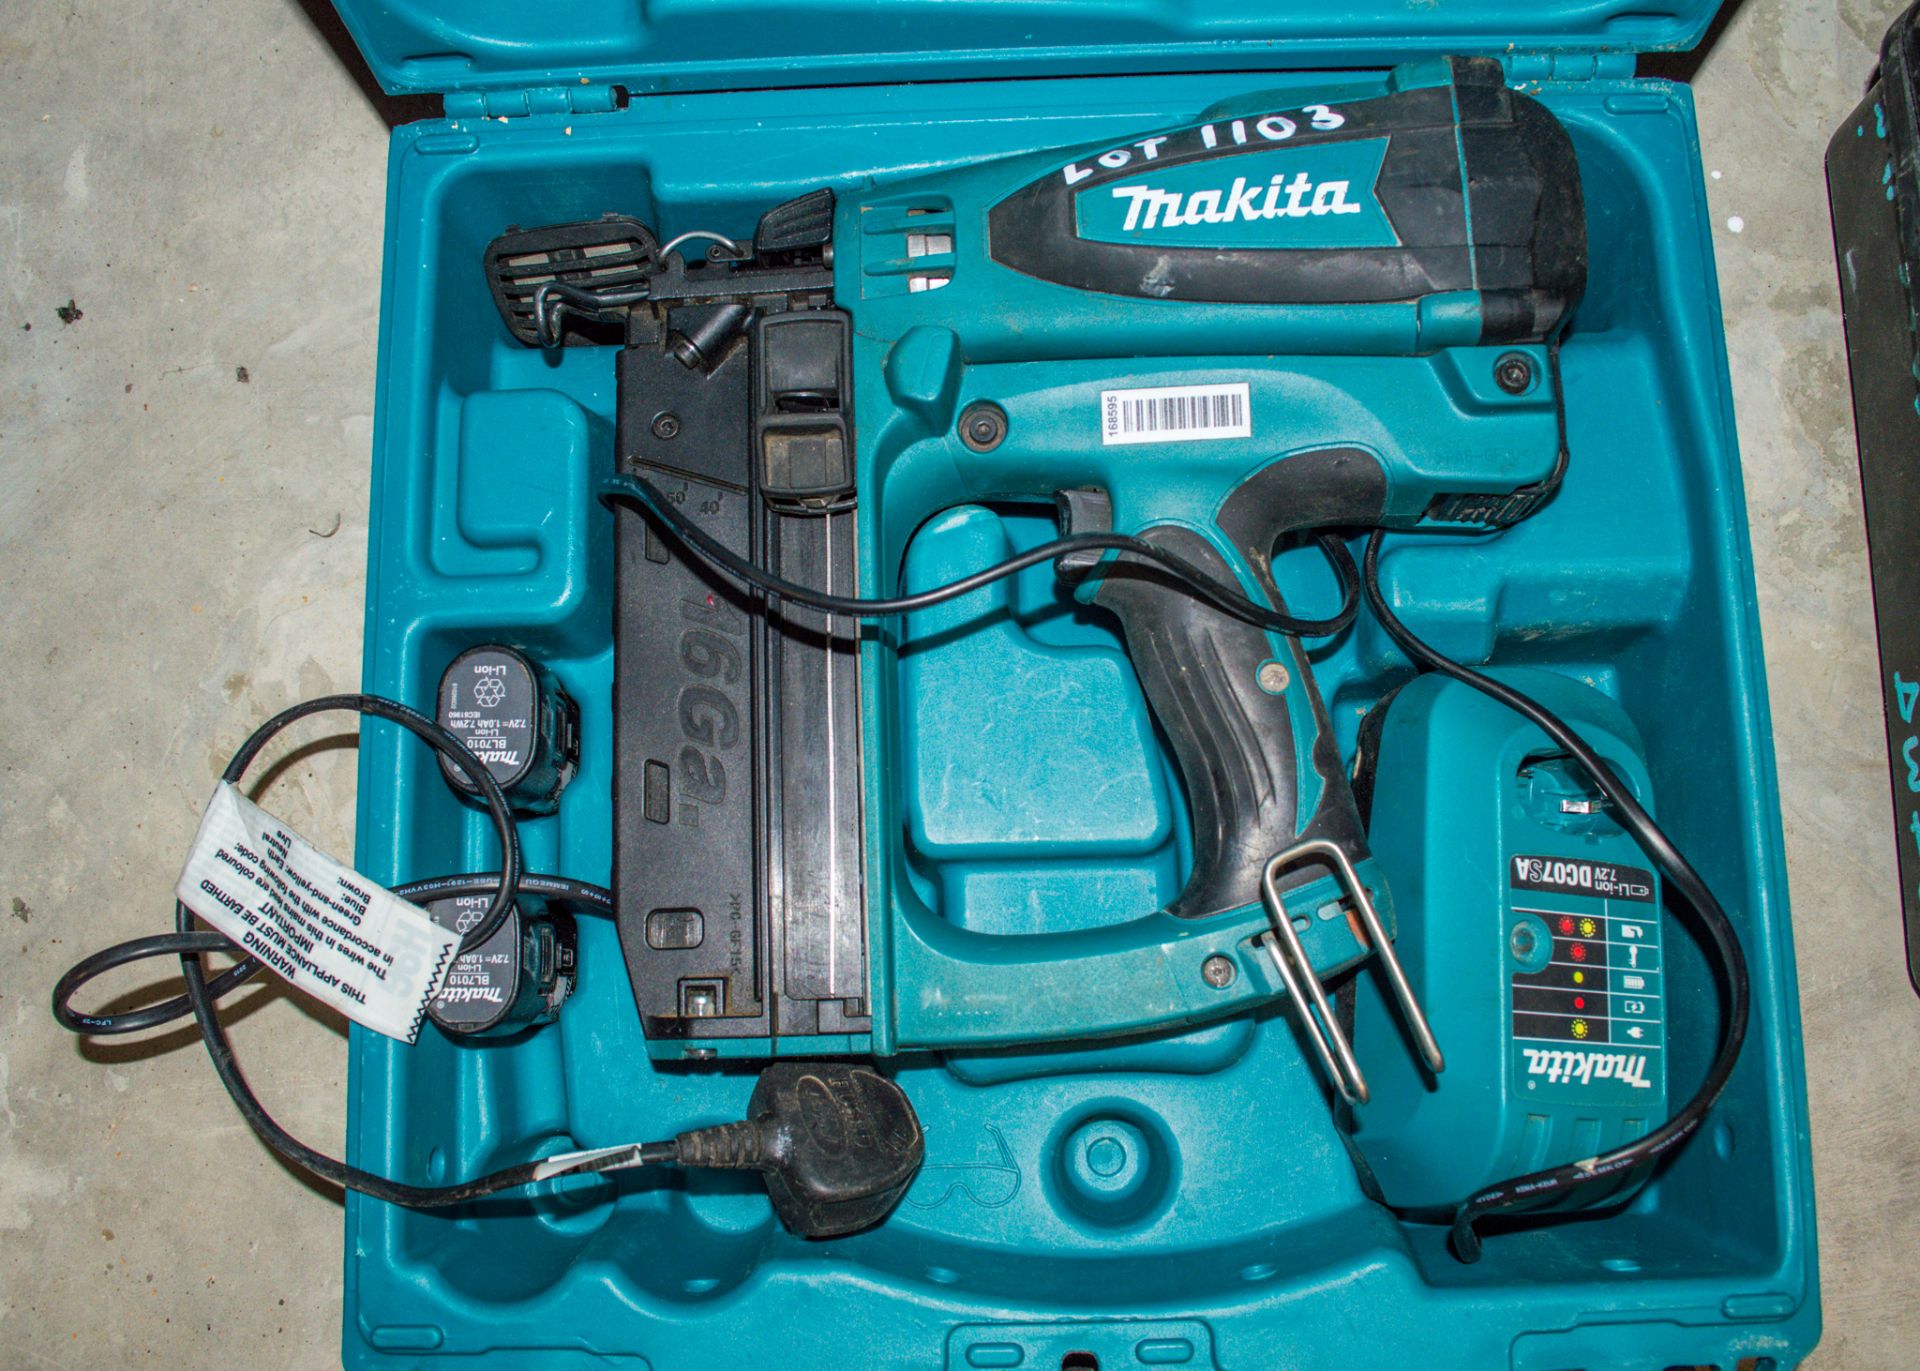 Makita staple gun c/w 2 batteries, charger and carry case MAK0217